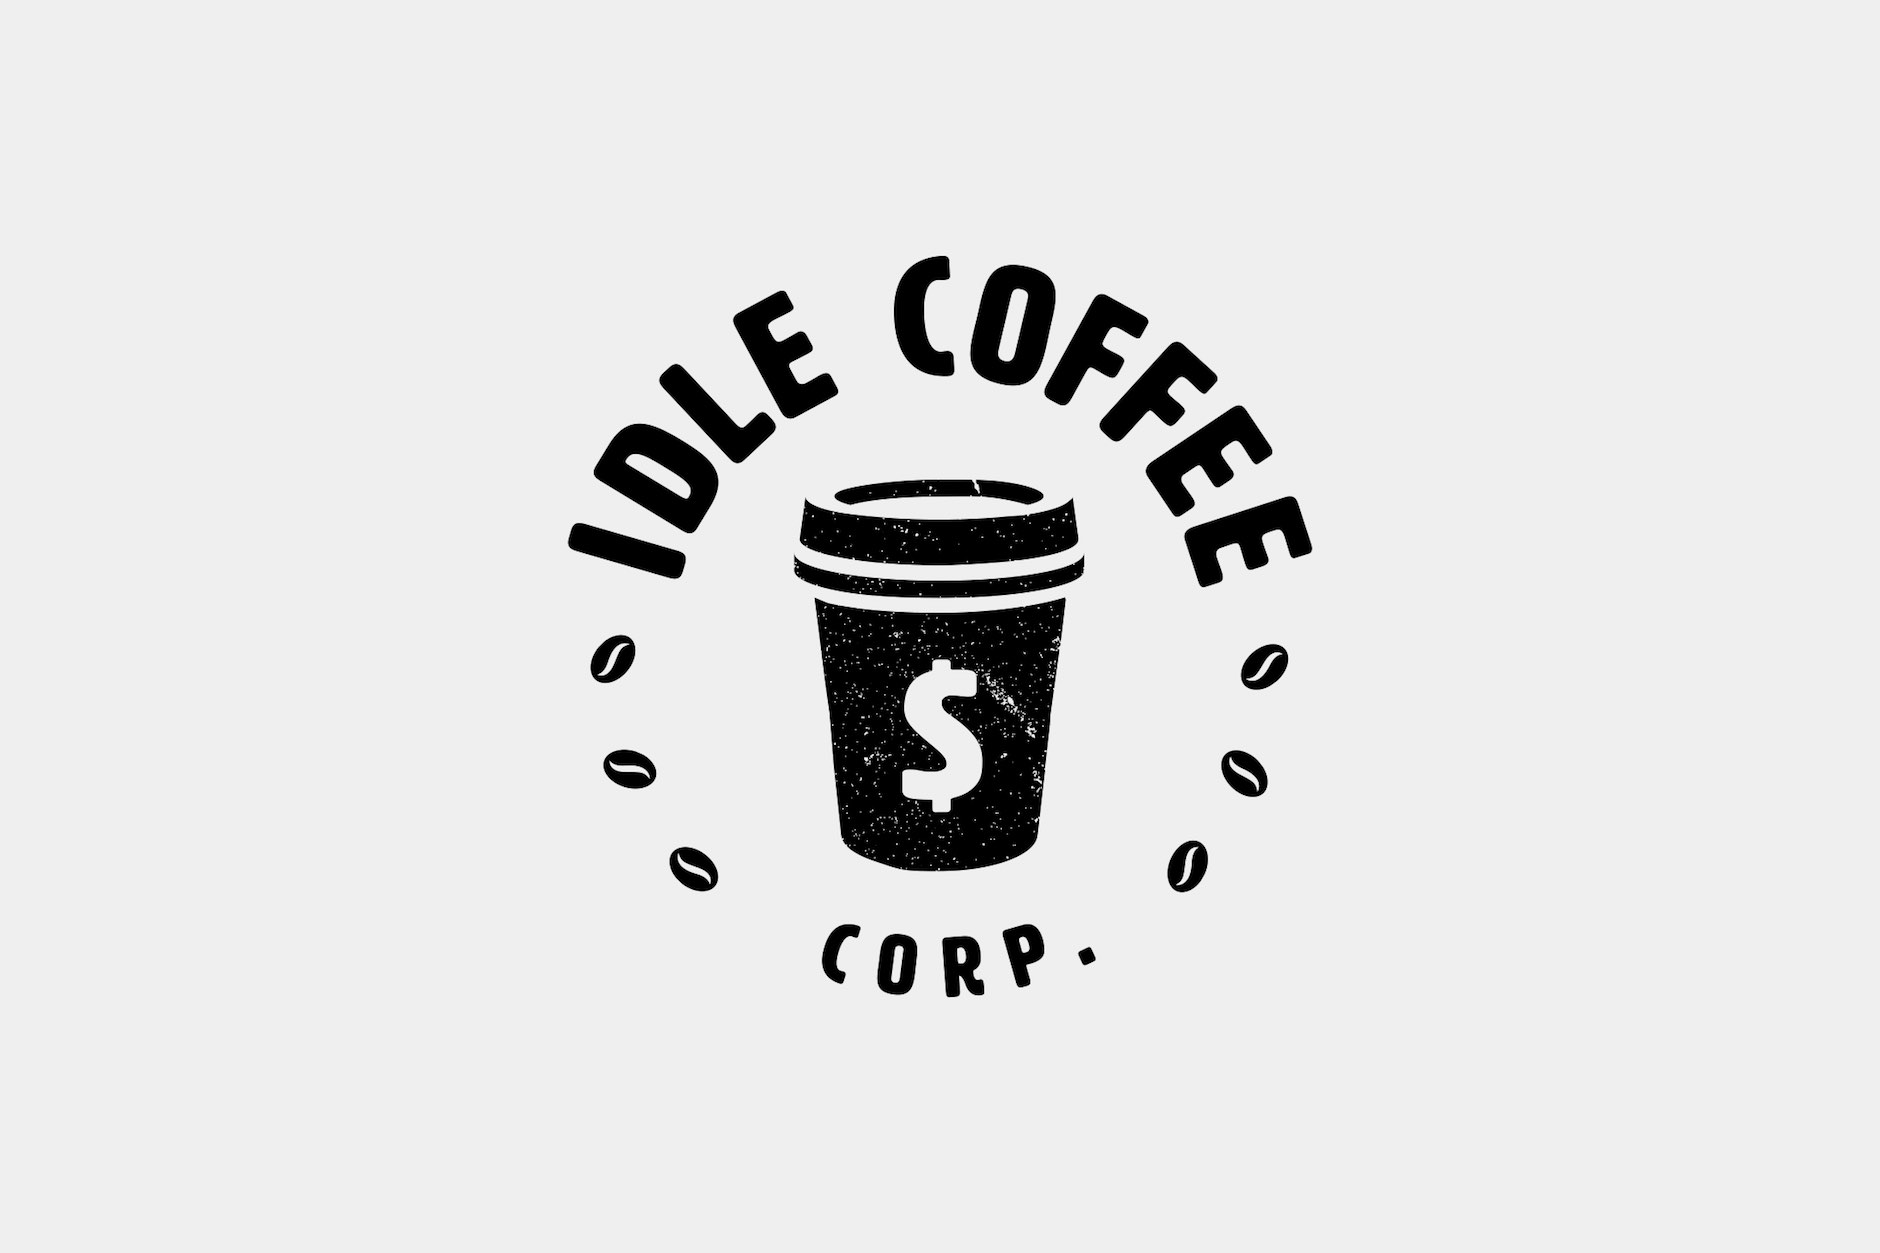 Idle coffee corp logo